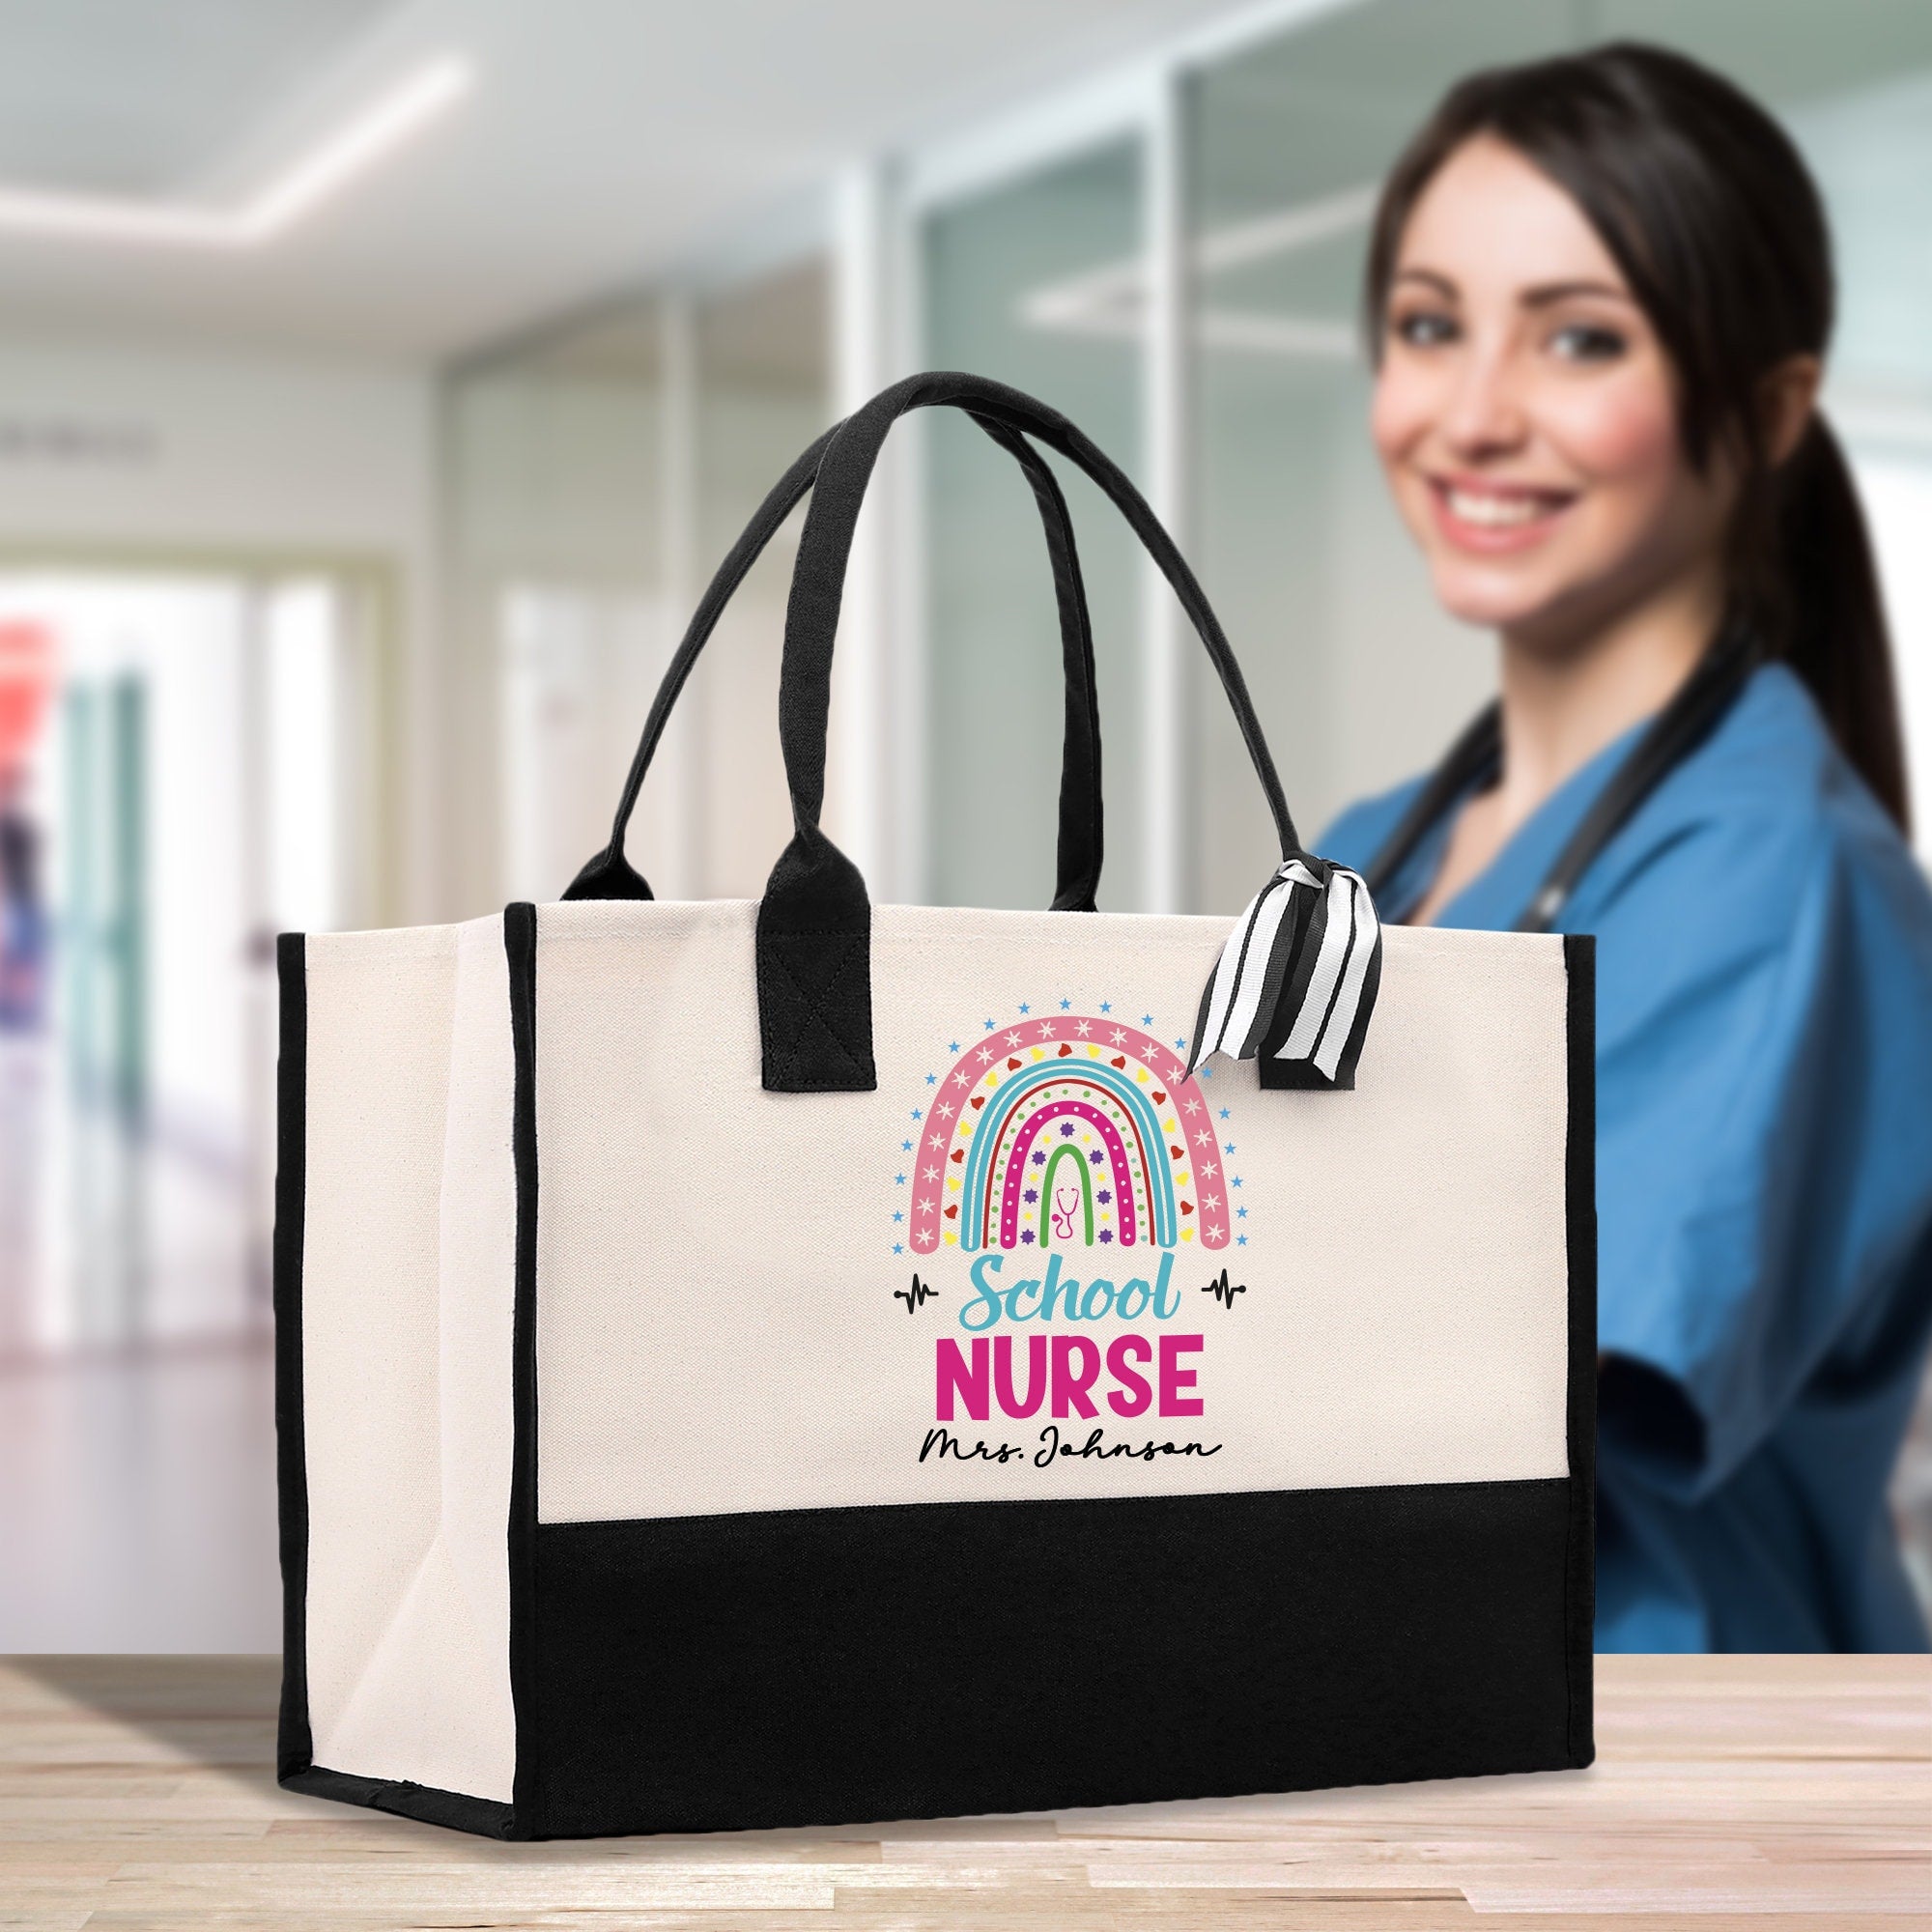 School Nurse Personalized Tote Bag Nurse Gift Registered Nurse Tote RN Tote RN Gift Future Nursing Student Gift Nurse Graduation Gift